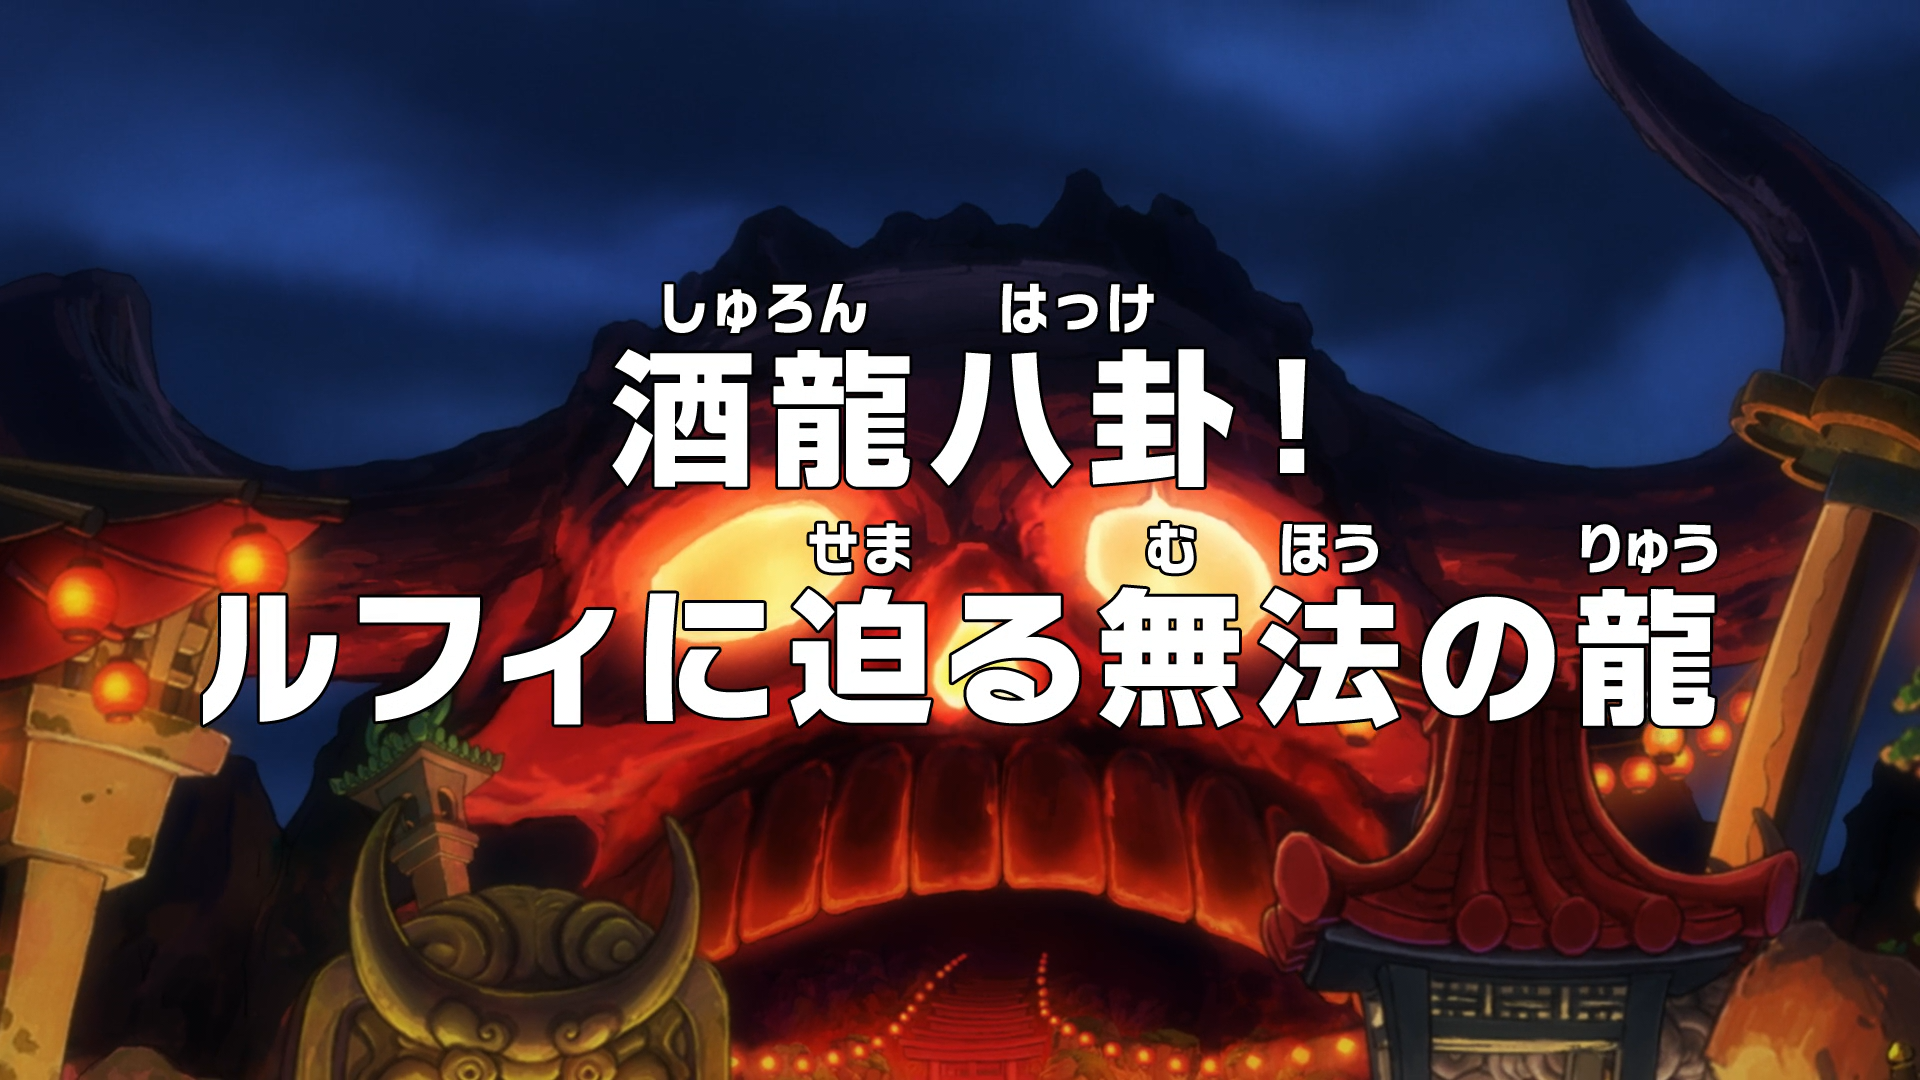 One Piece: WANO KUNI (892-Current) Drunken Dragon Bagua! The Lawless Dragon  Closing in on Luffy - Watch on Crunchyroll